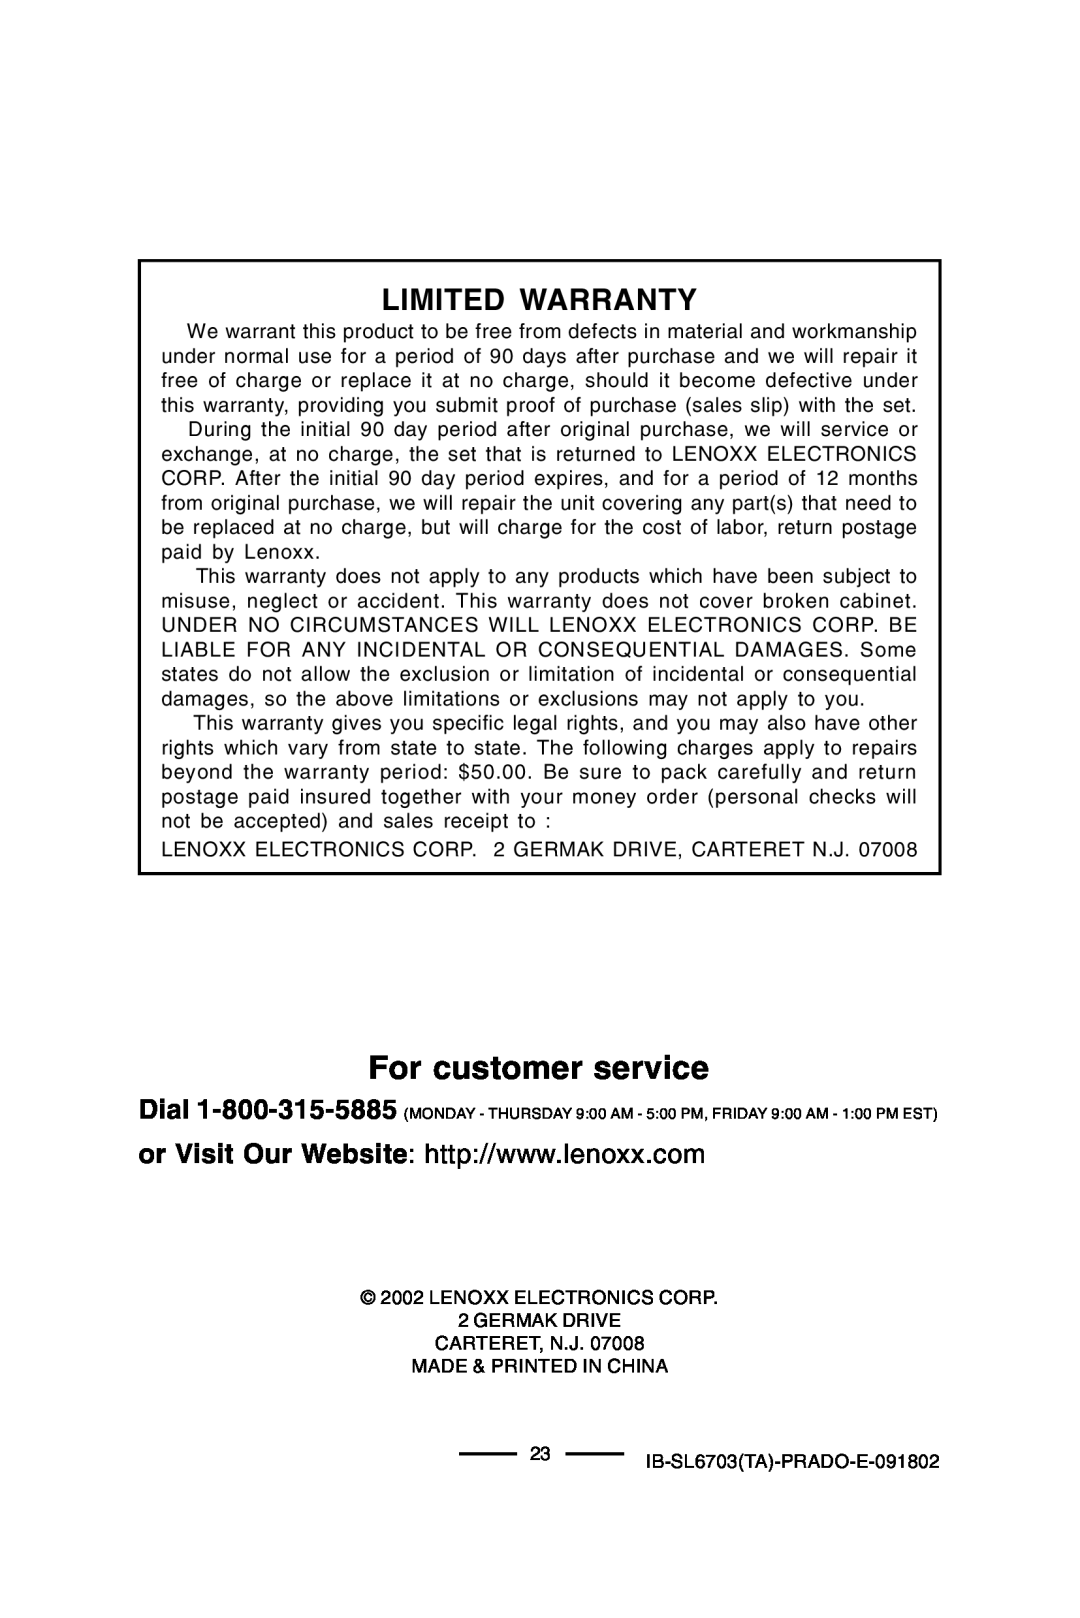 Lenoxx Electronics SL-6703 manual For customer service, Limited Warranty 